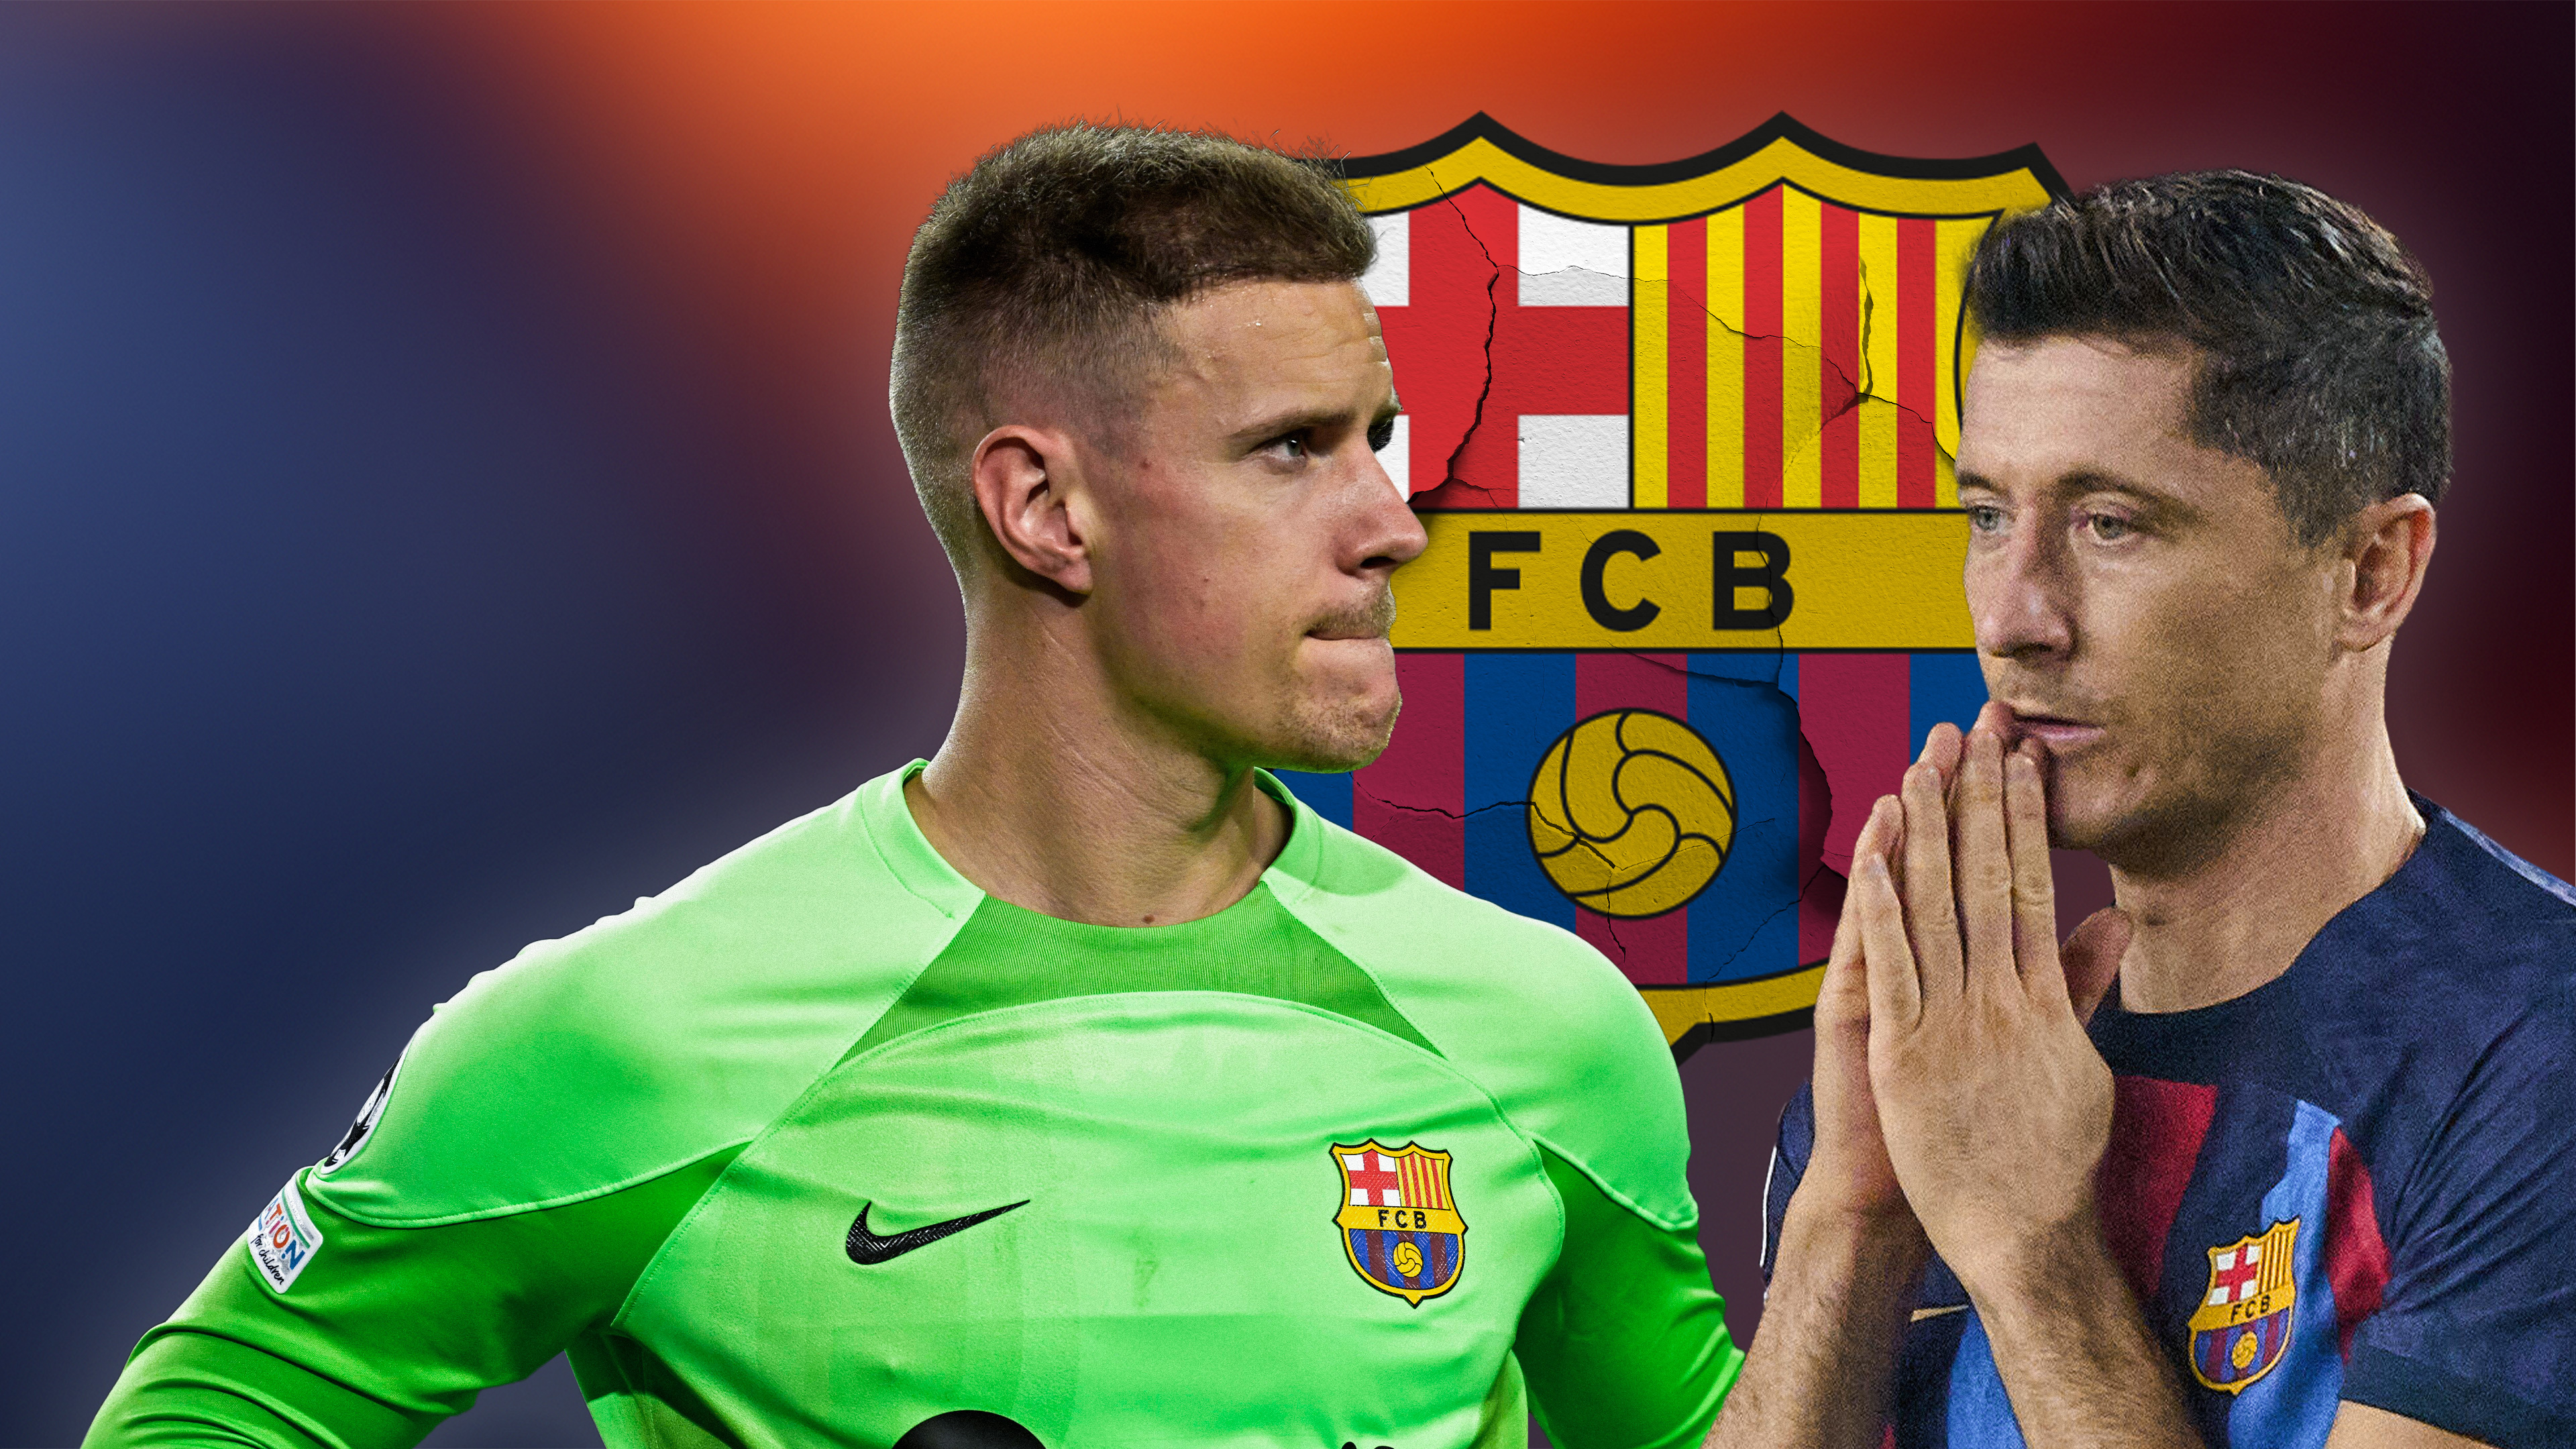 Wie kann der FC Barcelona die Krise meistern?